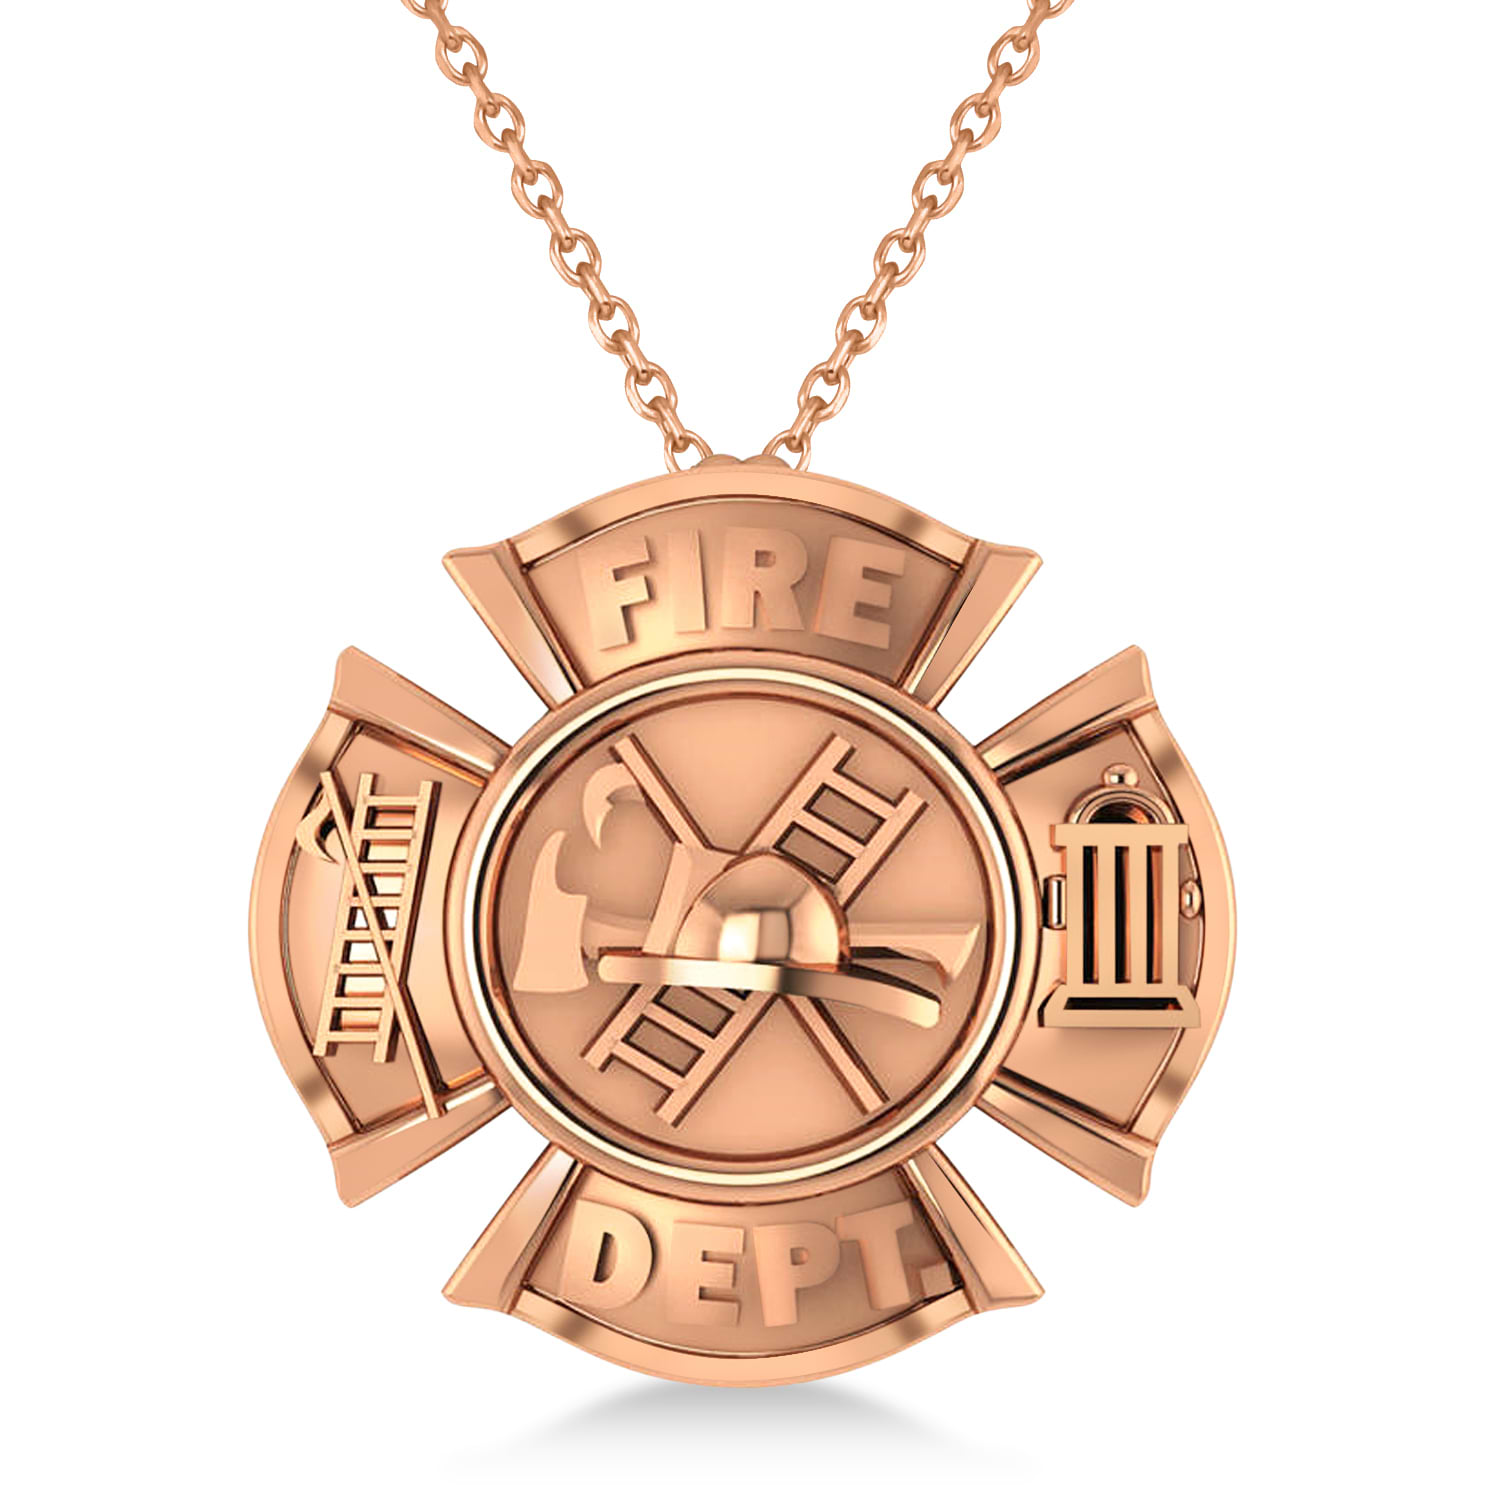 Fire Department Badge Pendant Necklace 14k Rose Gold